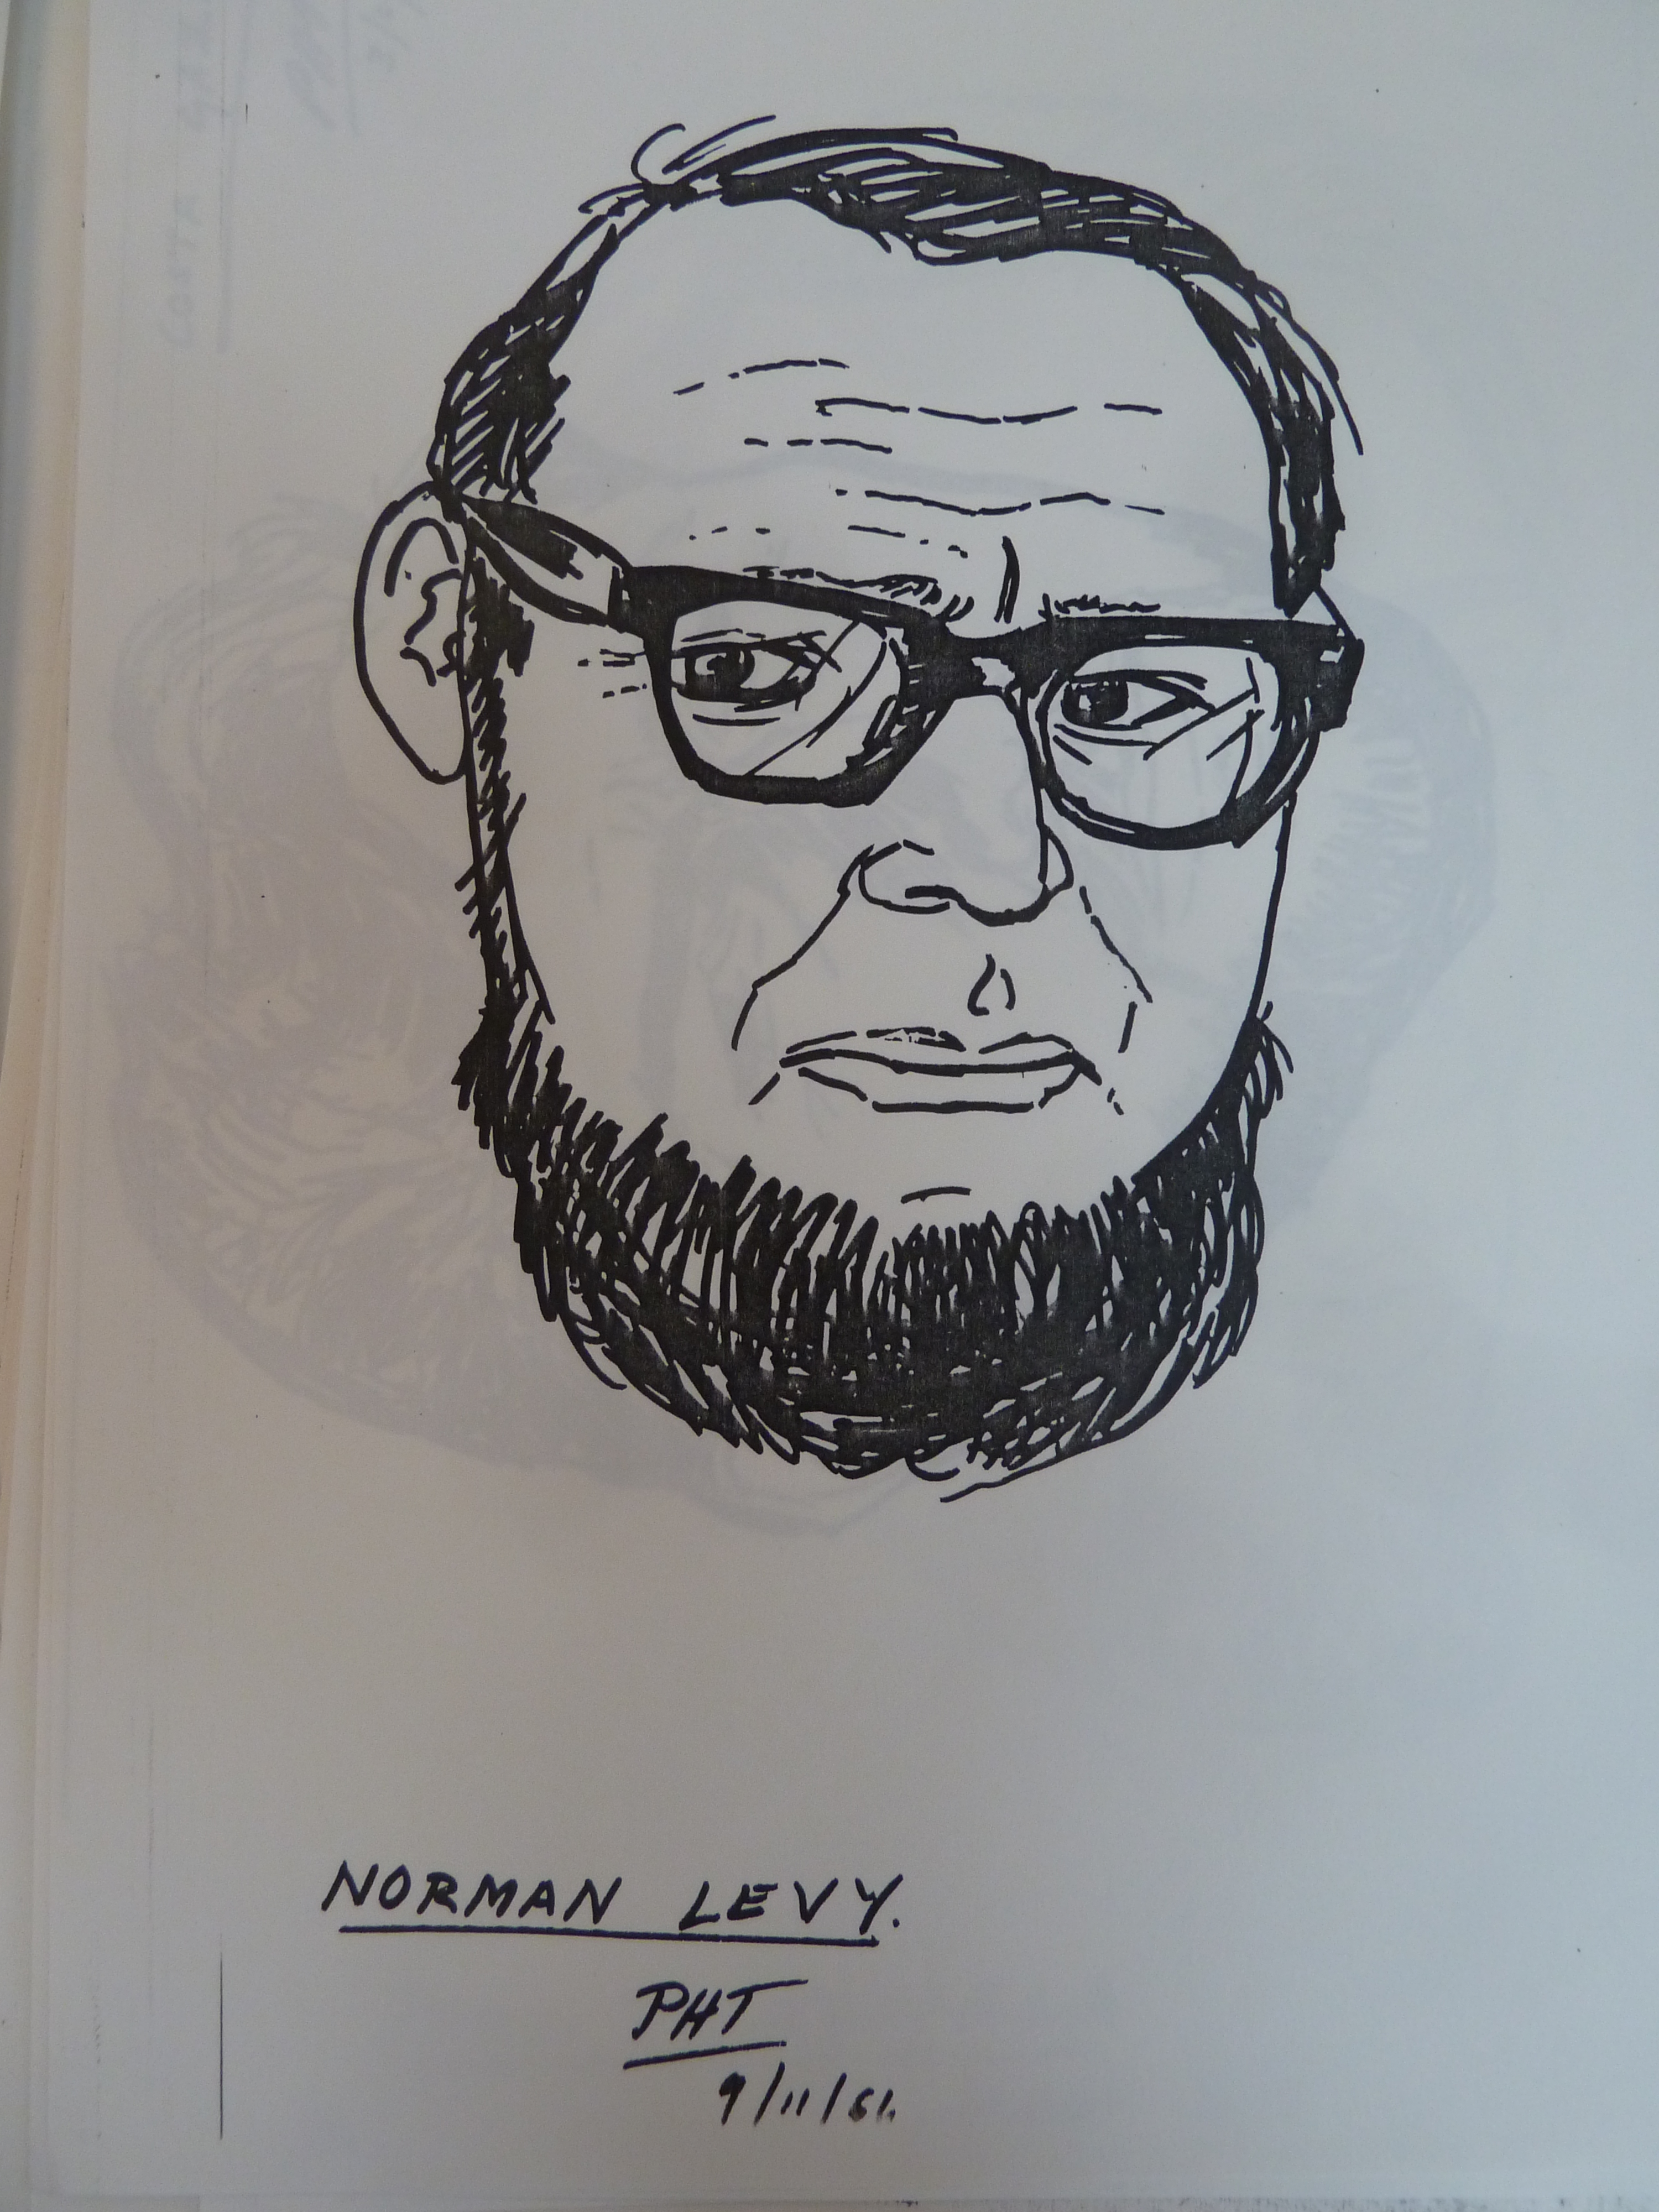 Norman Levy by Paul Trewhela - November 1964